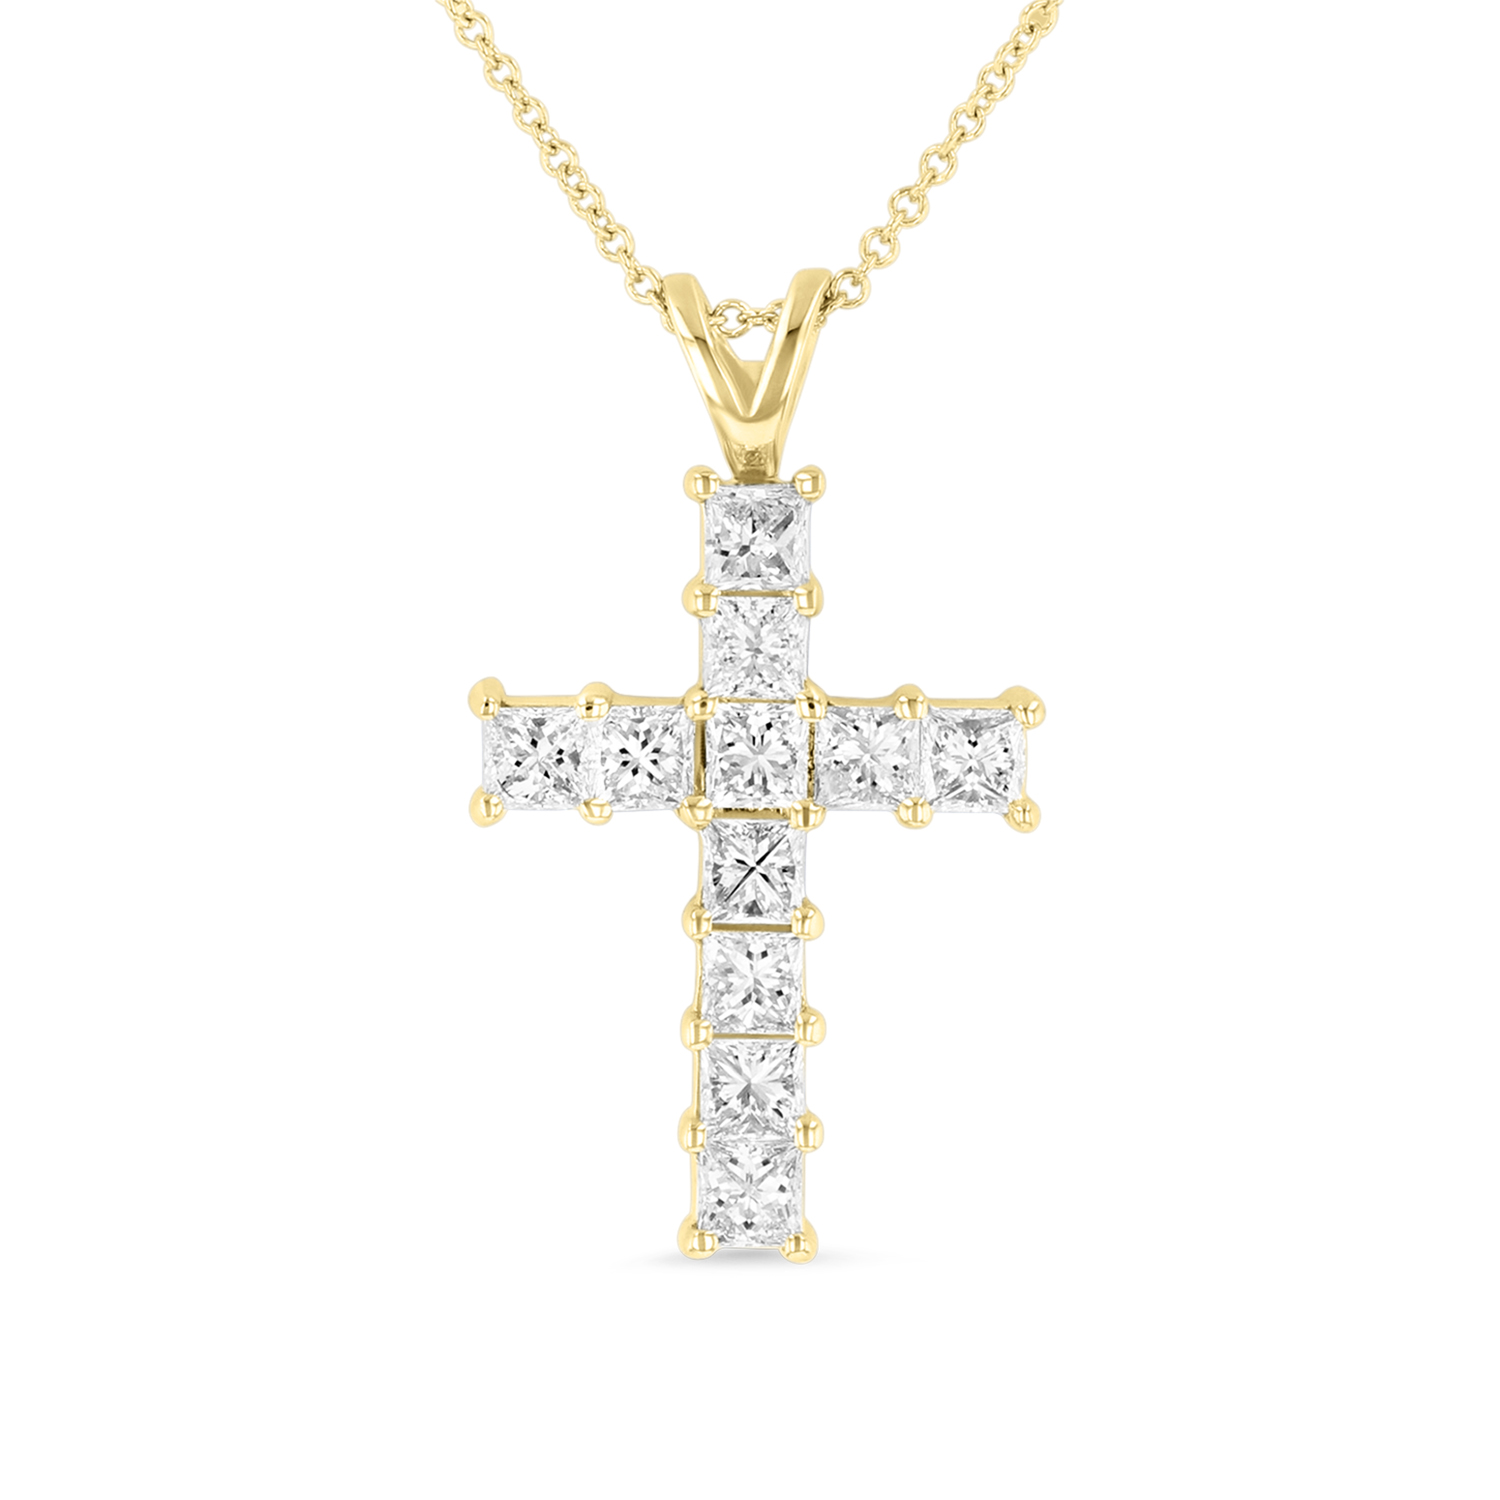 View 1.50ctw Diamond Cross Pendant in 14k Yellow Gold